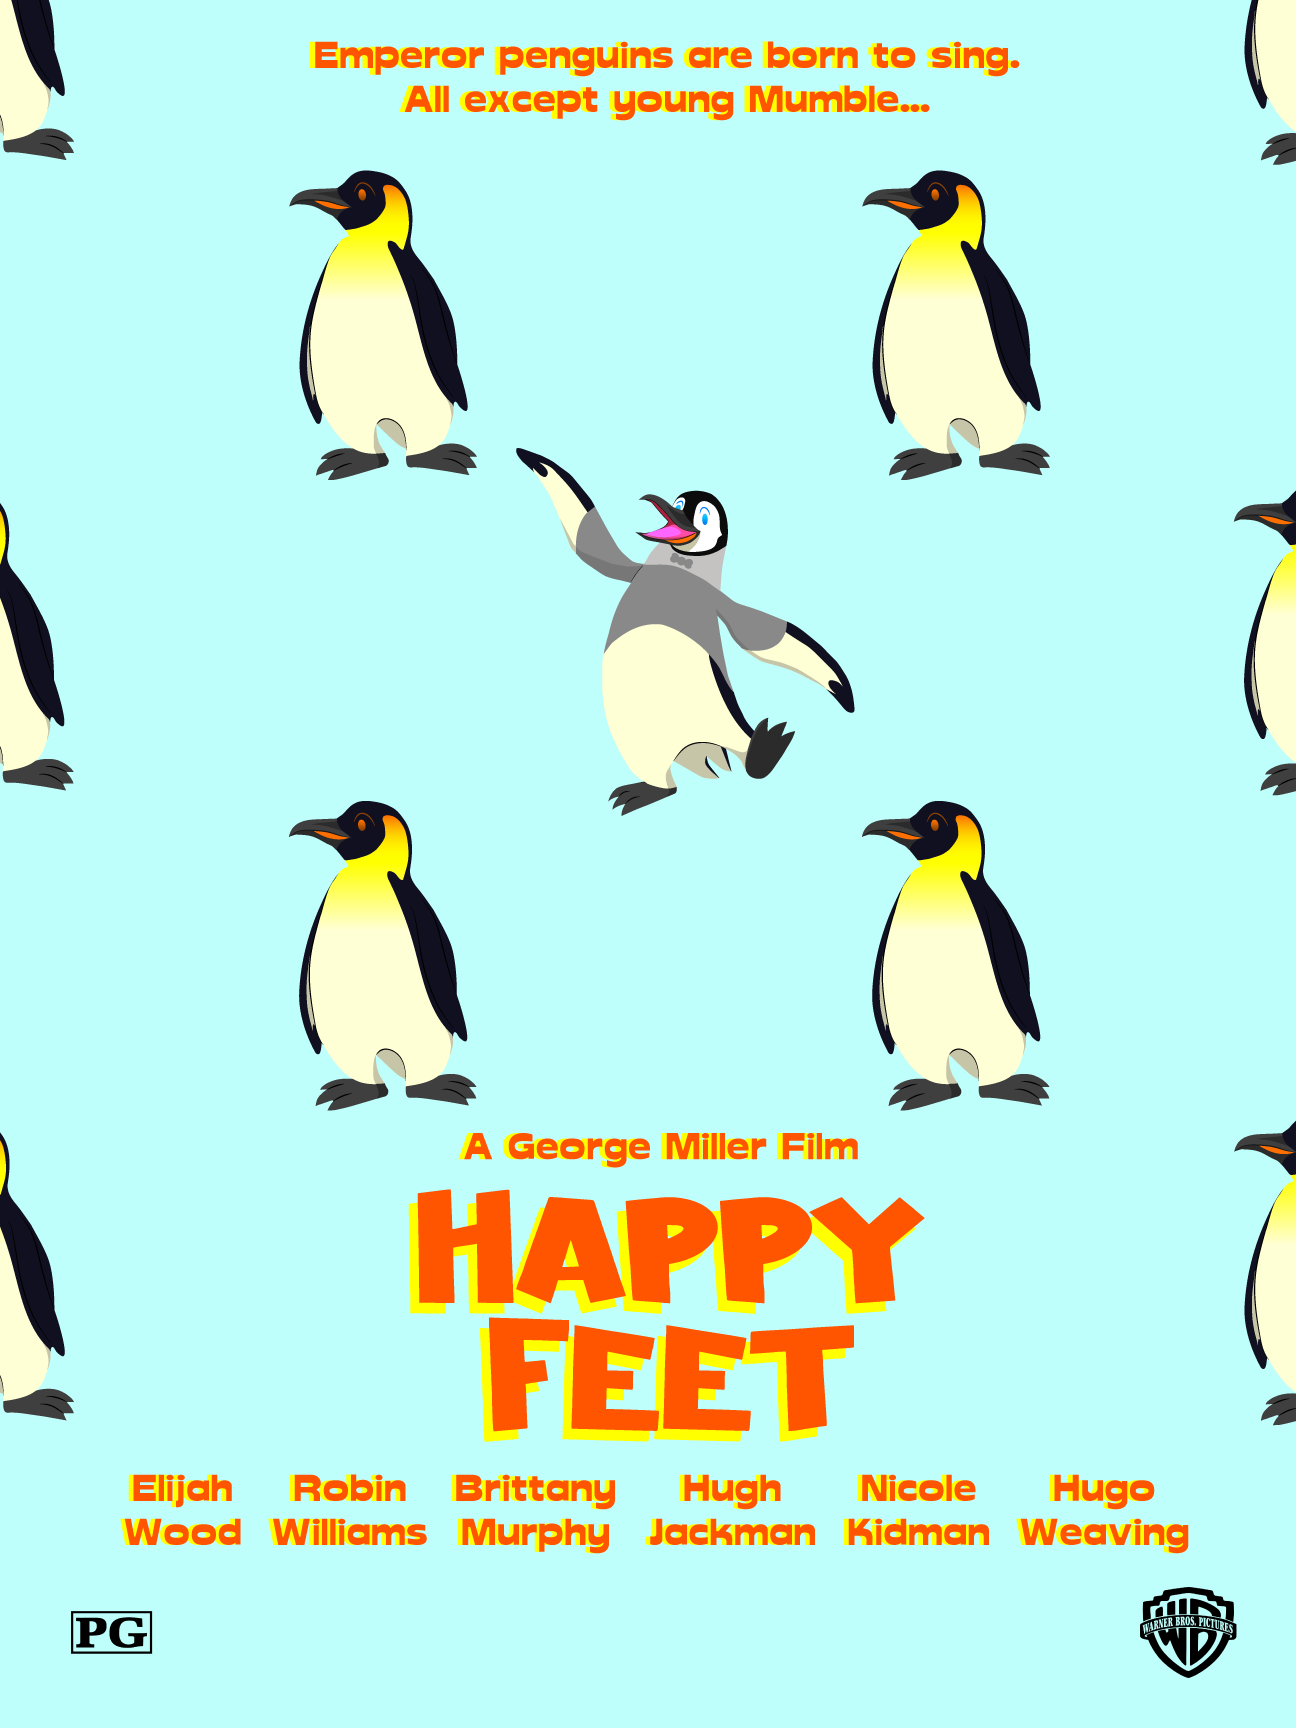 Alternative Movie Poster for “Happy Feet” (2006)